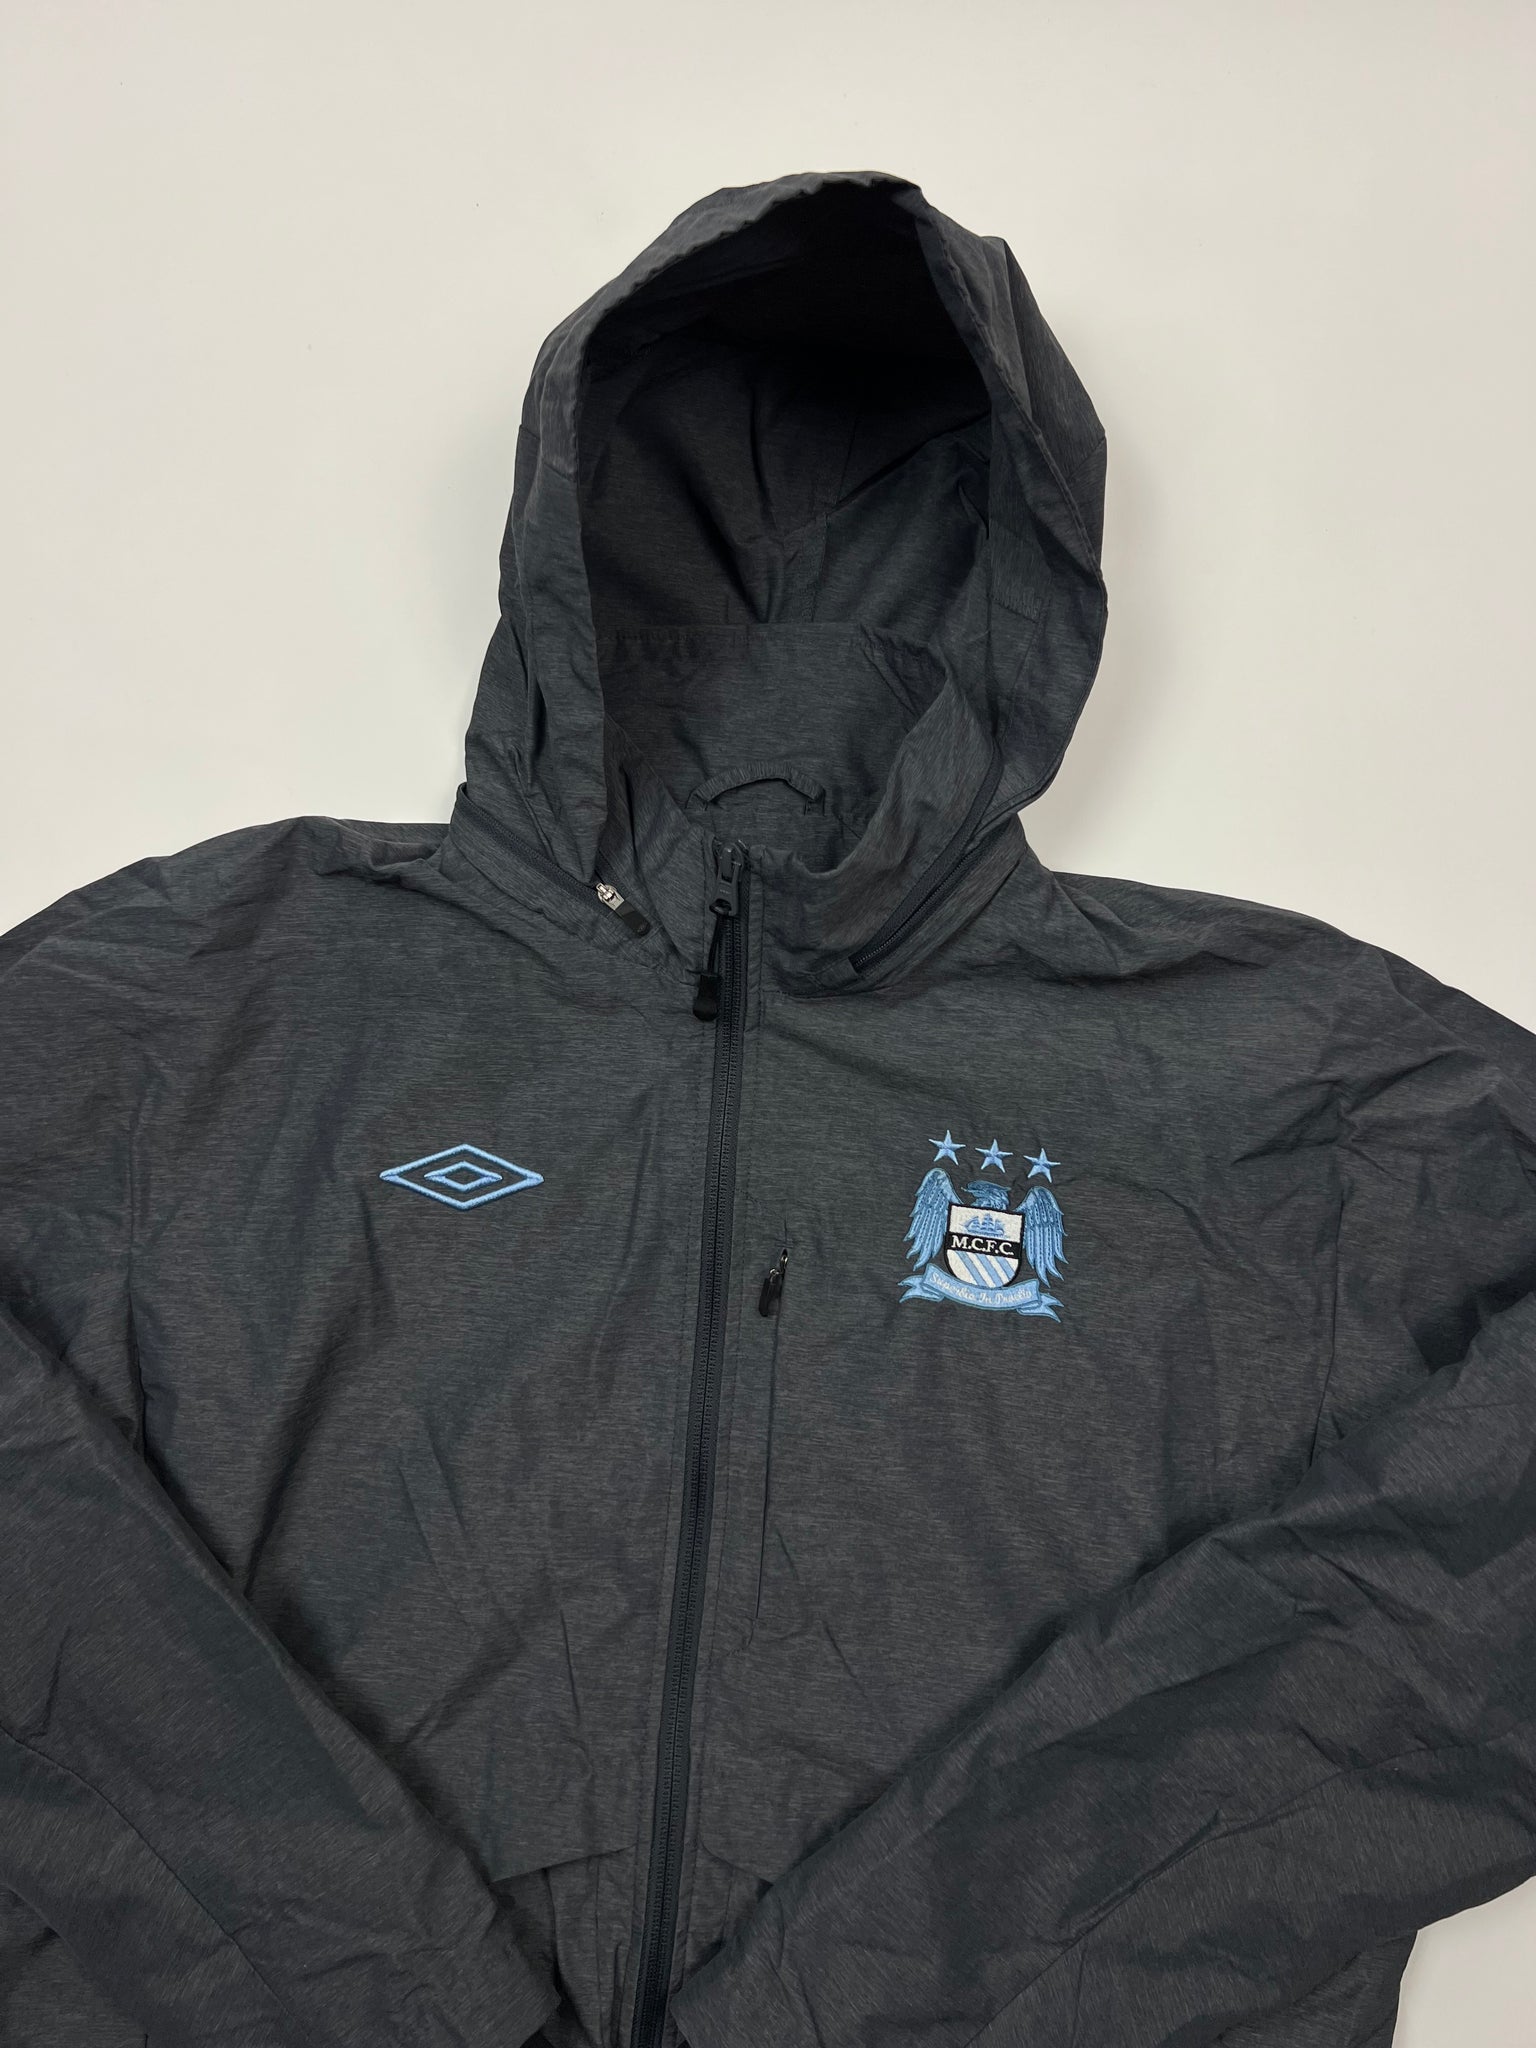 Umbro Manchester City Jacket (L)